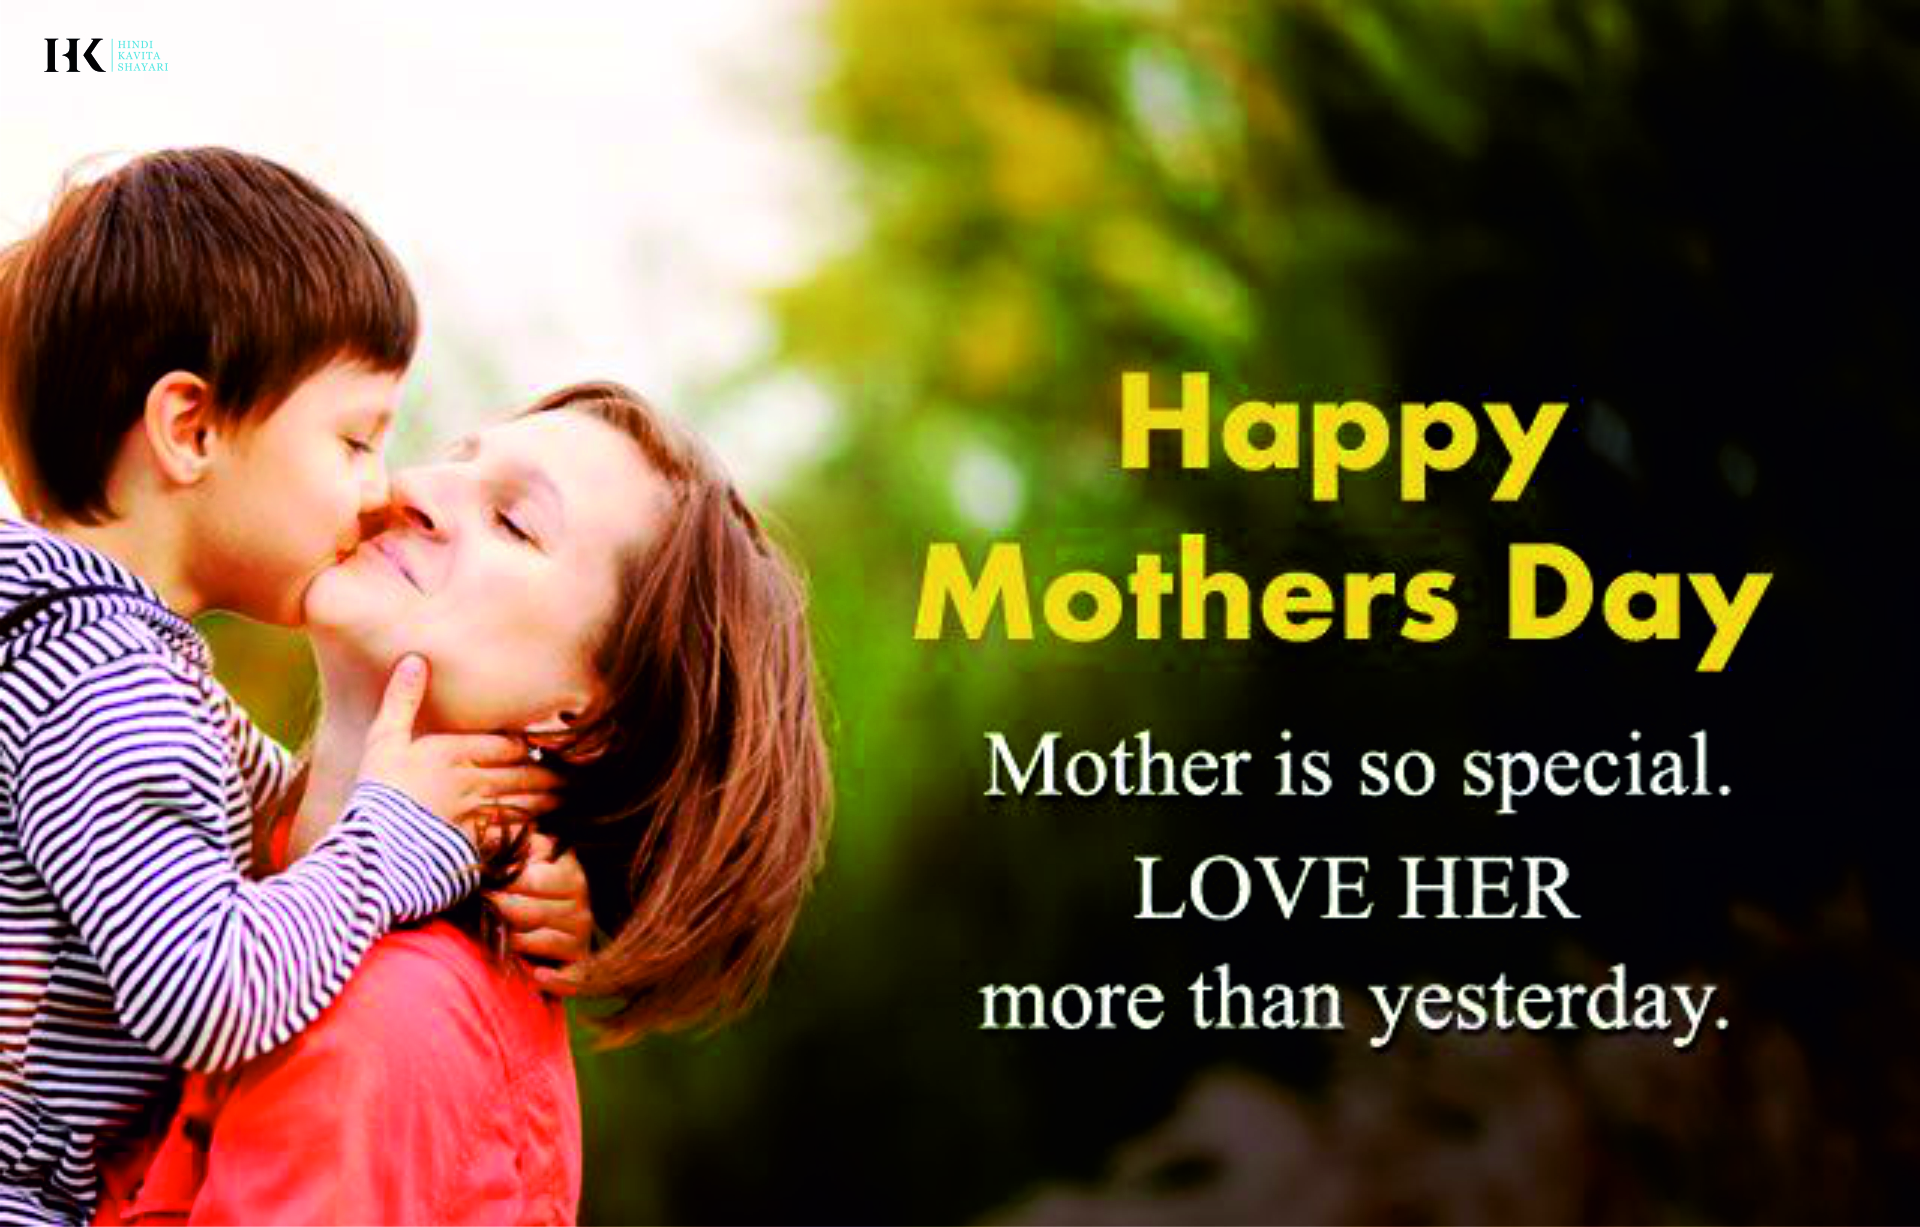 मदर्स डे फोटो 2020 - Mother's Day Images, Photos, Posters 2020, Mothers Day Par Quotes in Hindi 2020 - मदर्स डे पर कोट्स इन हिंदी